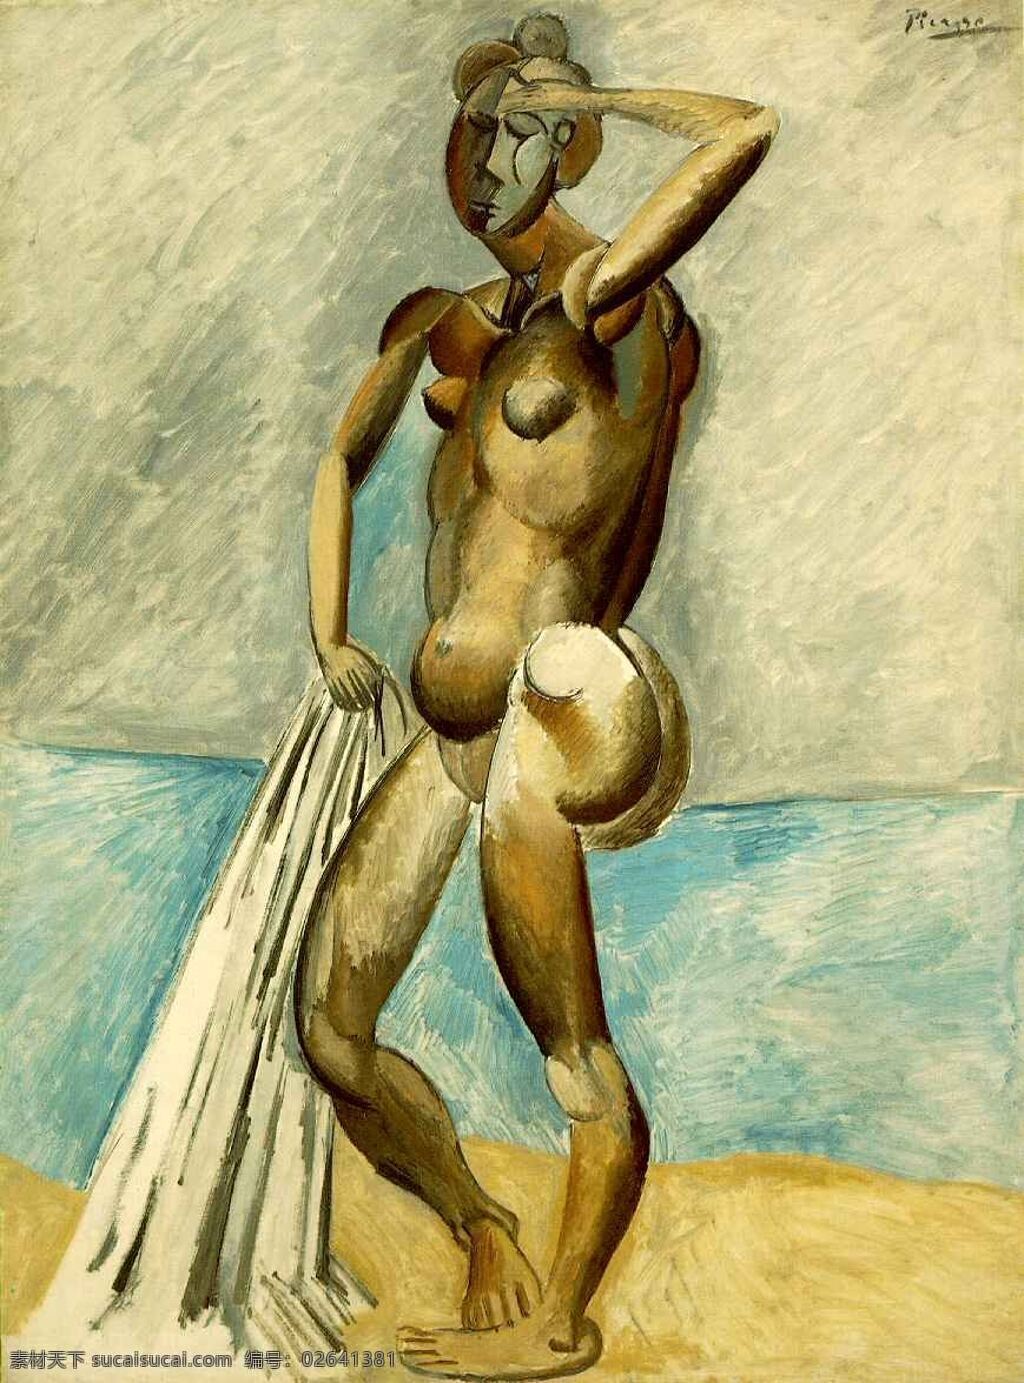 baigneuse 西班牙 画家 巴勃罗 毕加索 抽象 油画 人物 人体 装饰画 mer la de bord au nue femme 1908 家居装饰素材